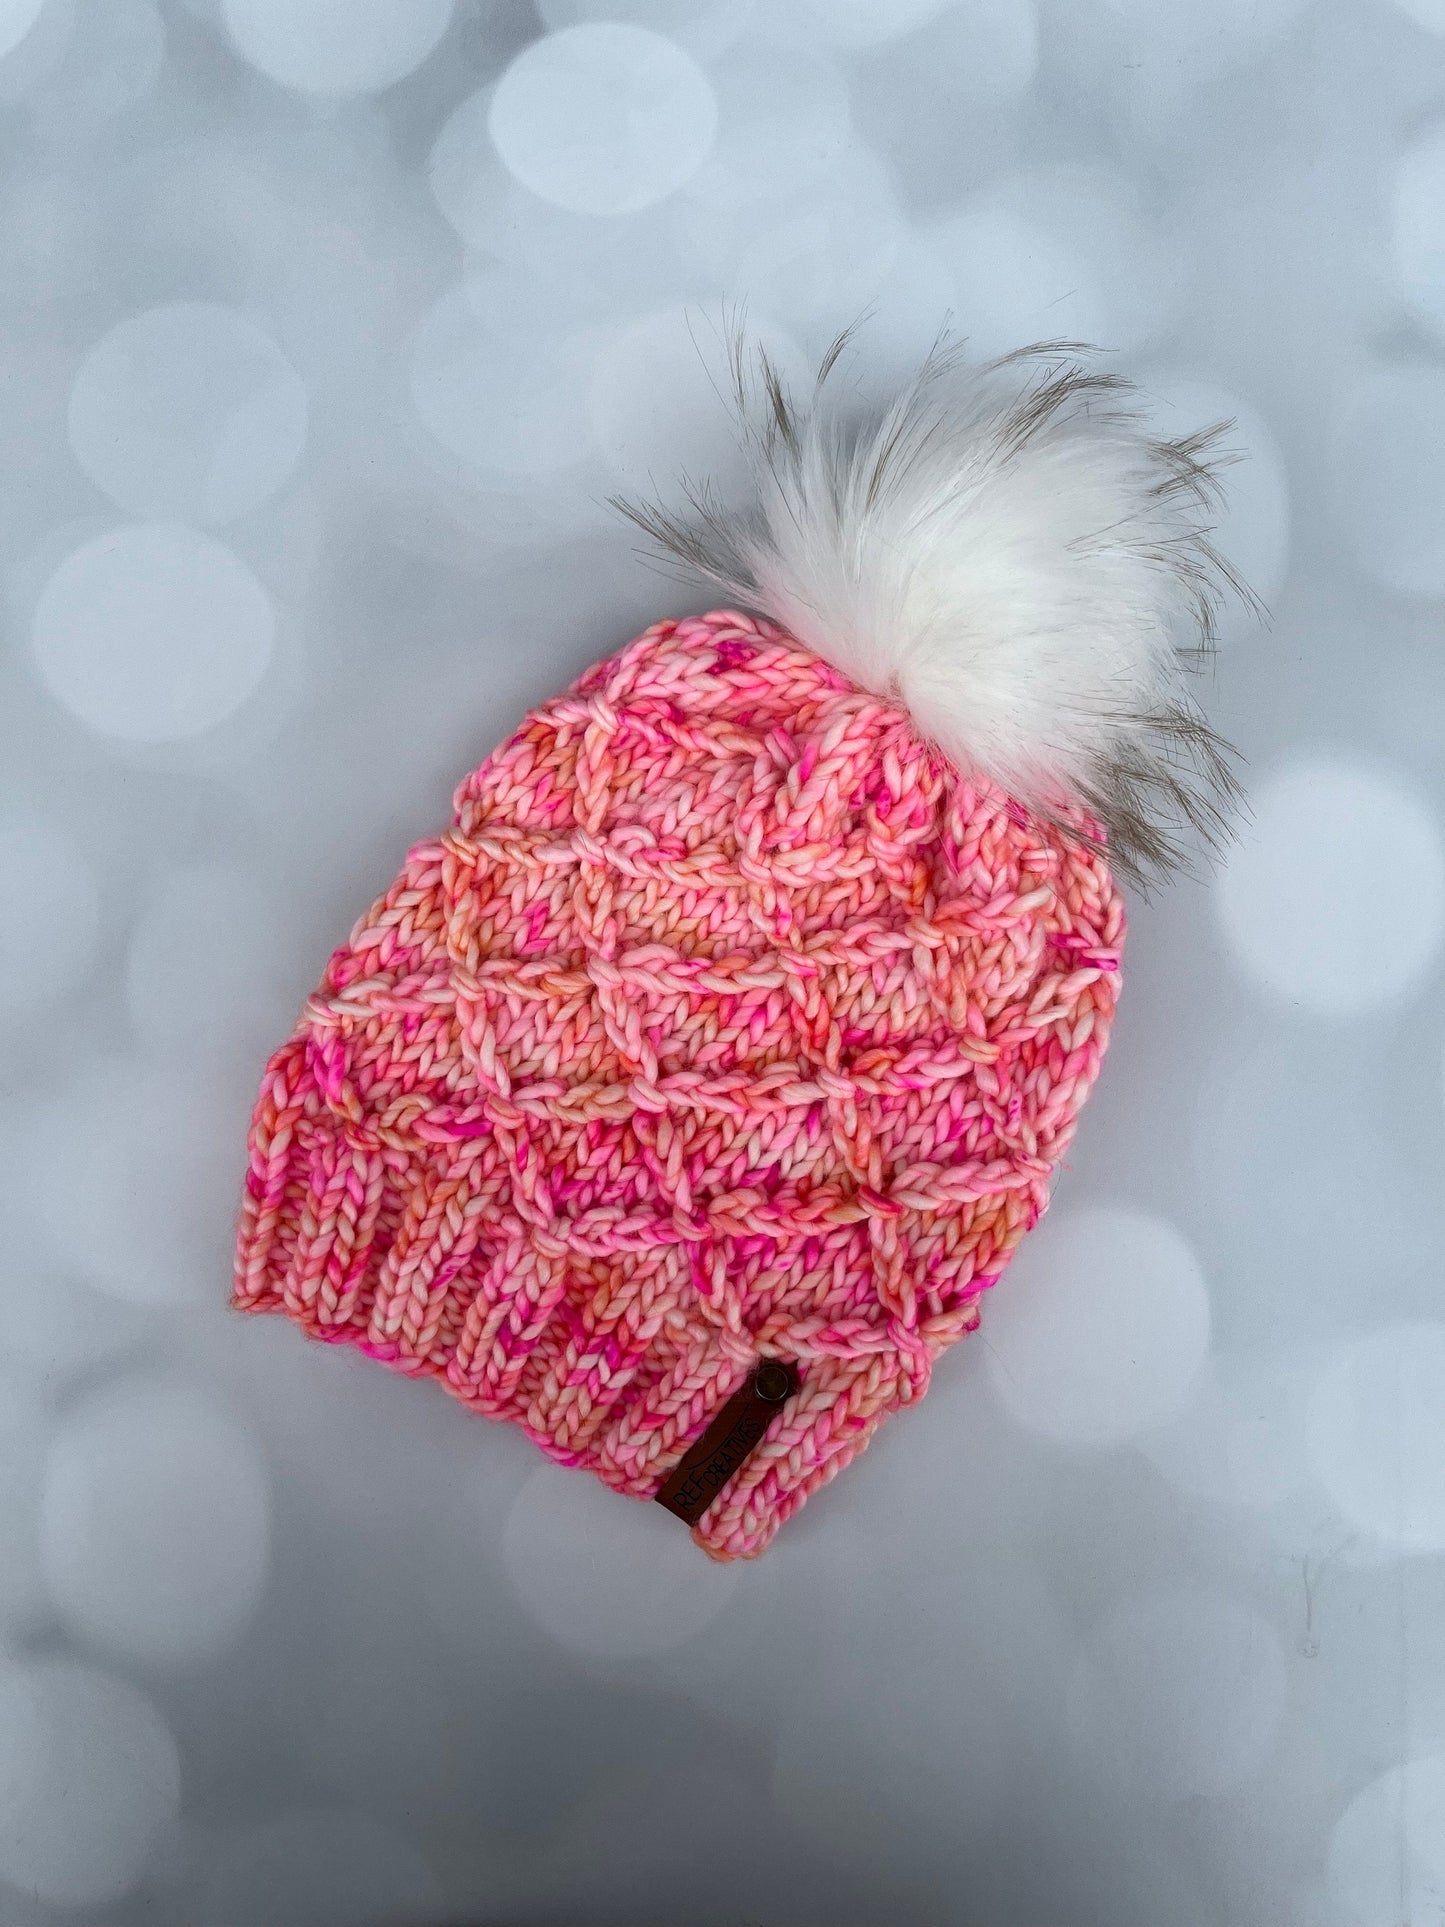 Luxury Pink Merino Wool Knit Hat - Neon Sherbert Lattice Beanie Hand Knit Hat with Hand Dyed Yarn